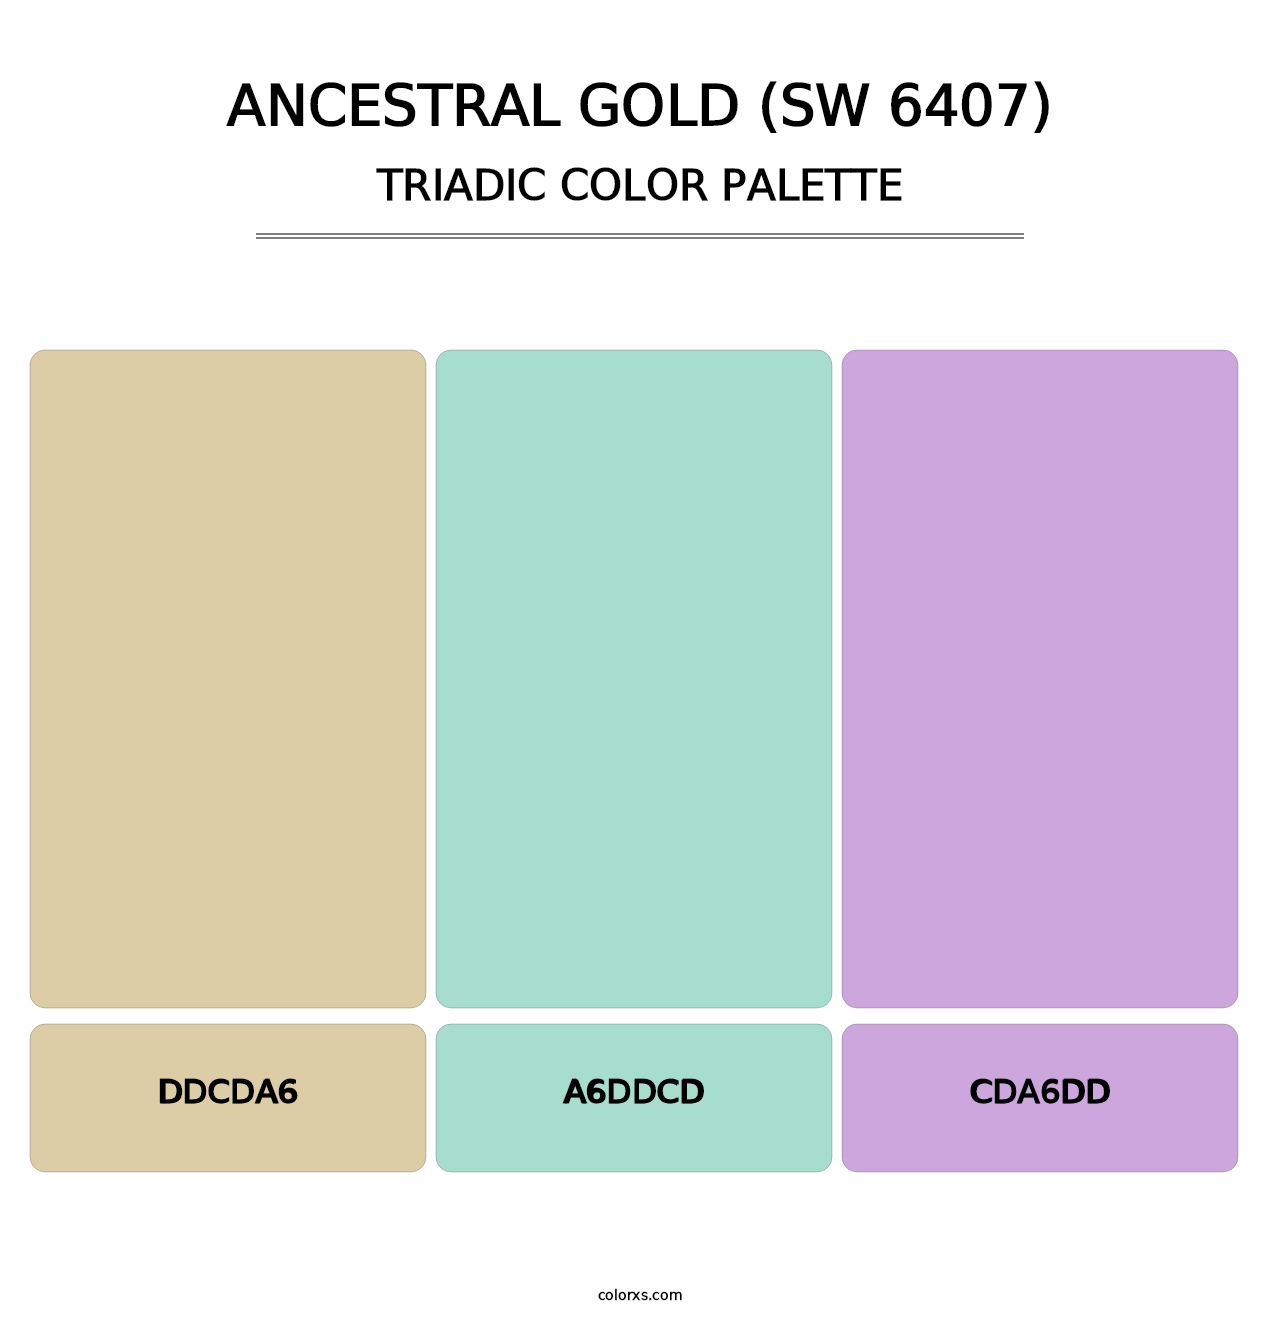 Ancestral Gold (SW 6407) - Triadic Color Palette